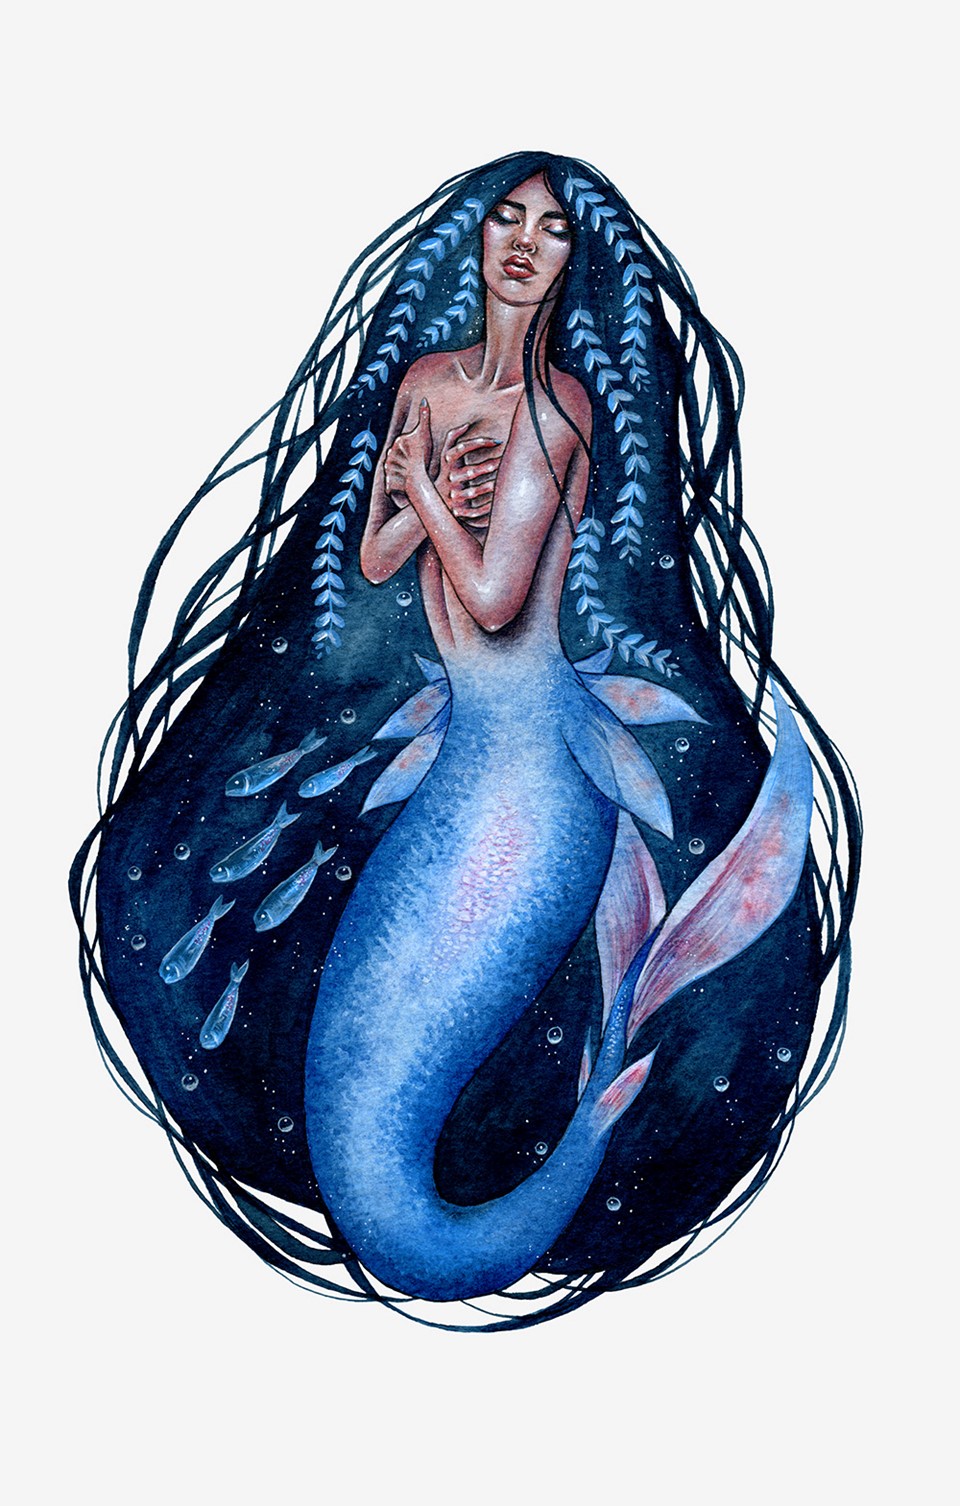 a mermaid illustration by artist Holly Khraibani